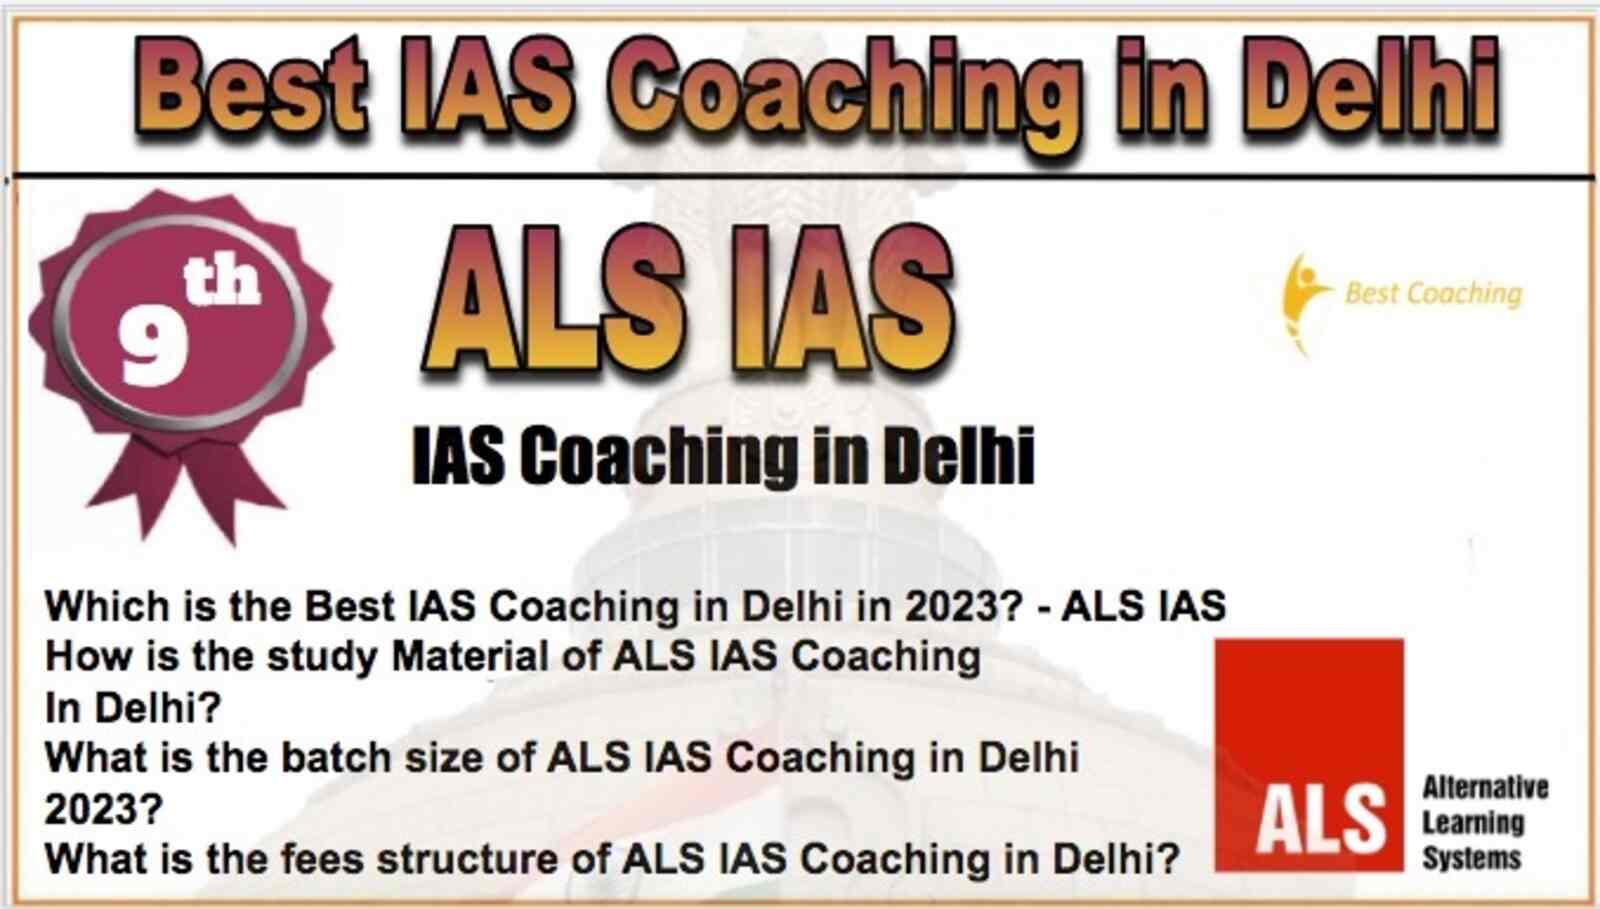 9th Best IAS Coaching in Delhi